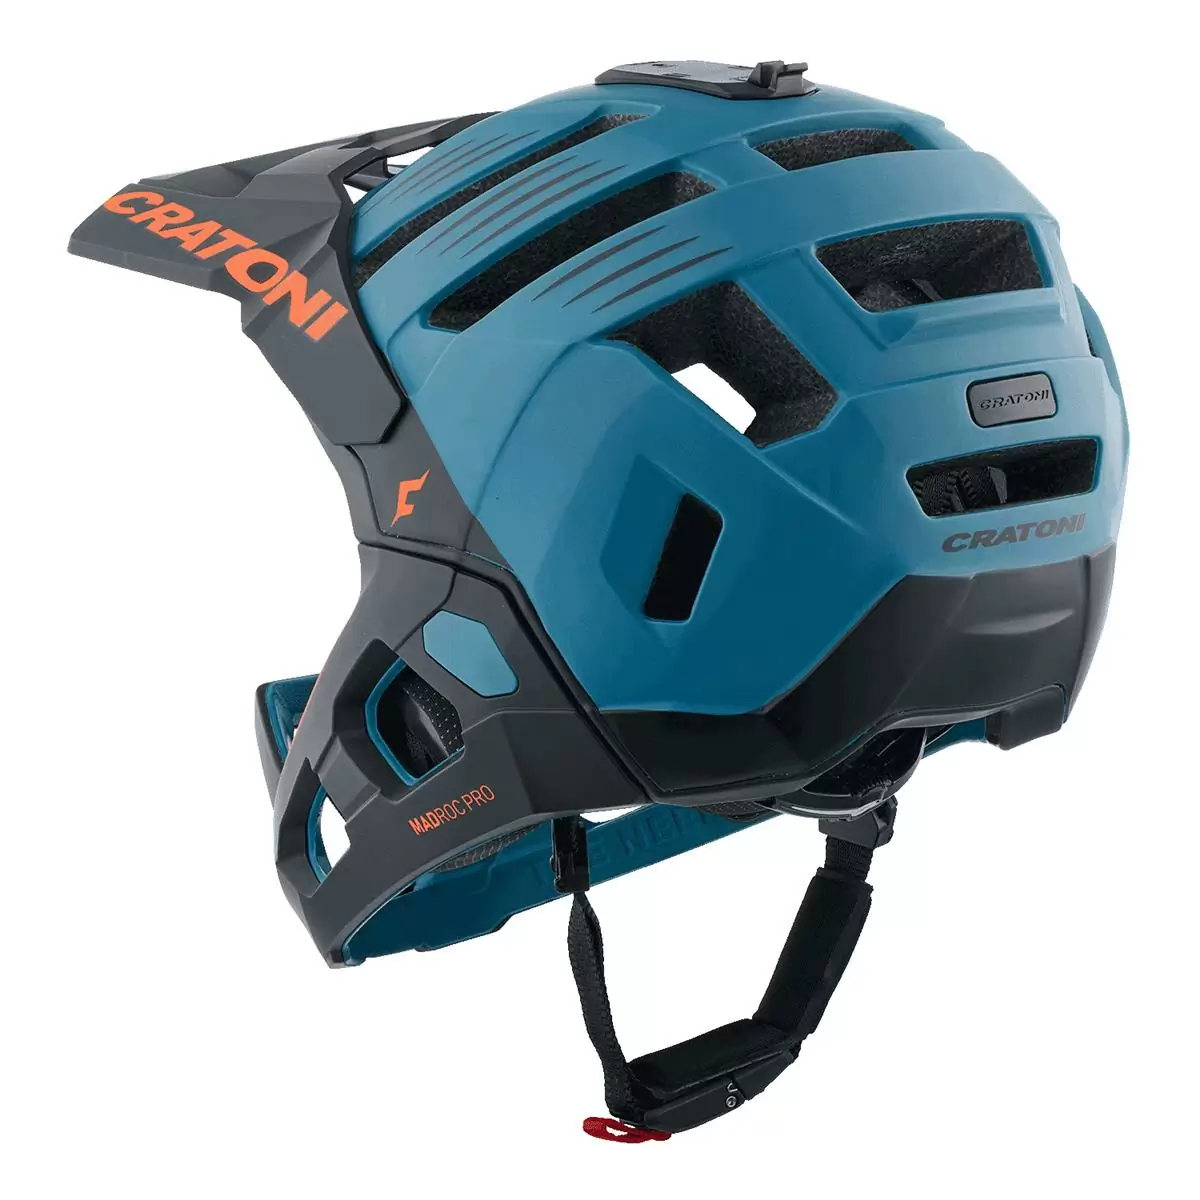 Madroc Pro Smart helmet Bluetooth black size M/L (58-61cm) #1